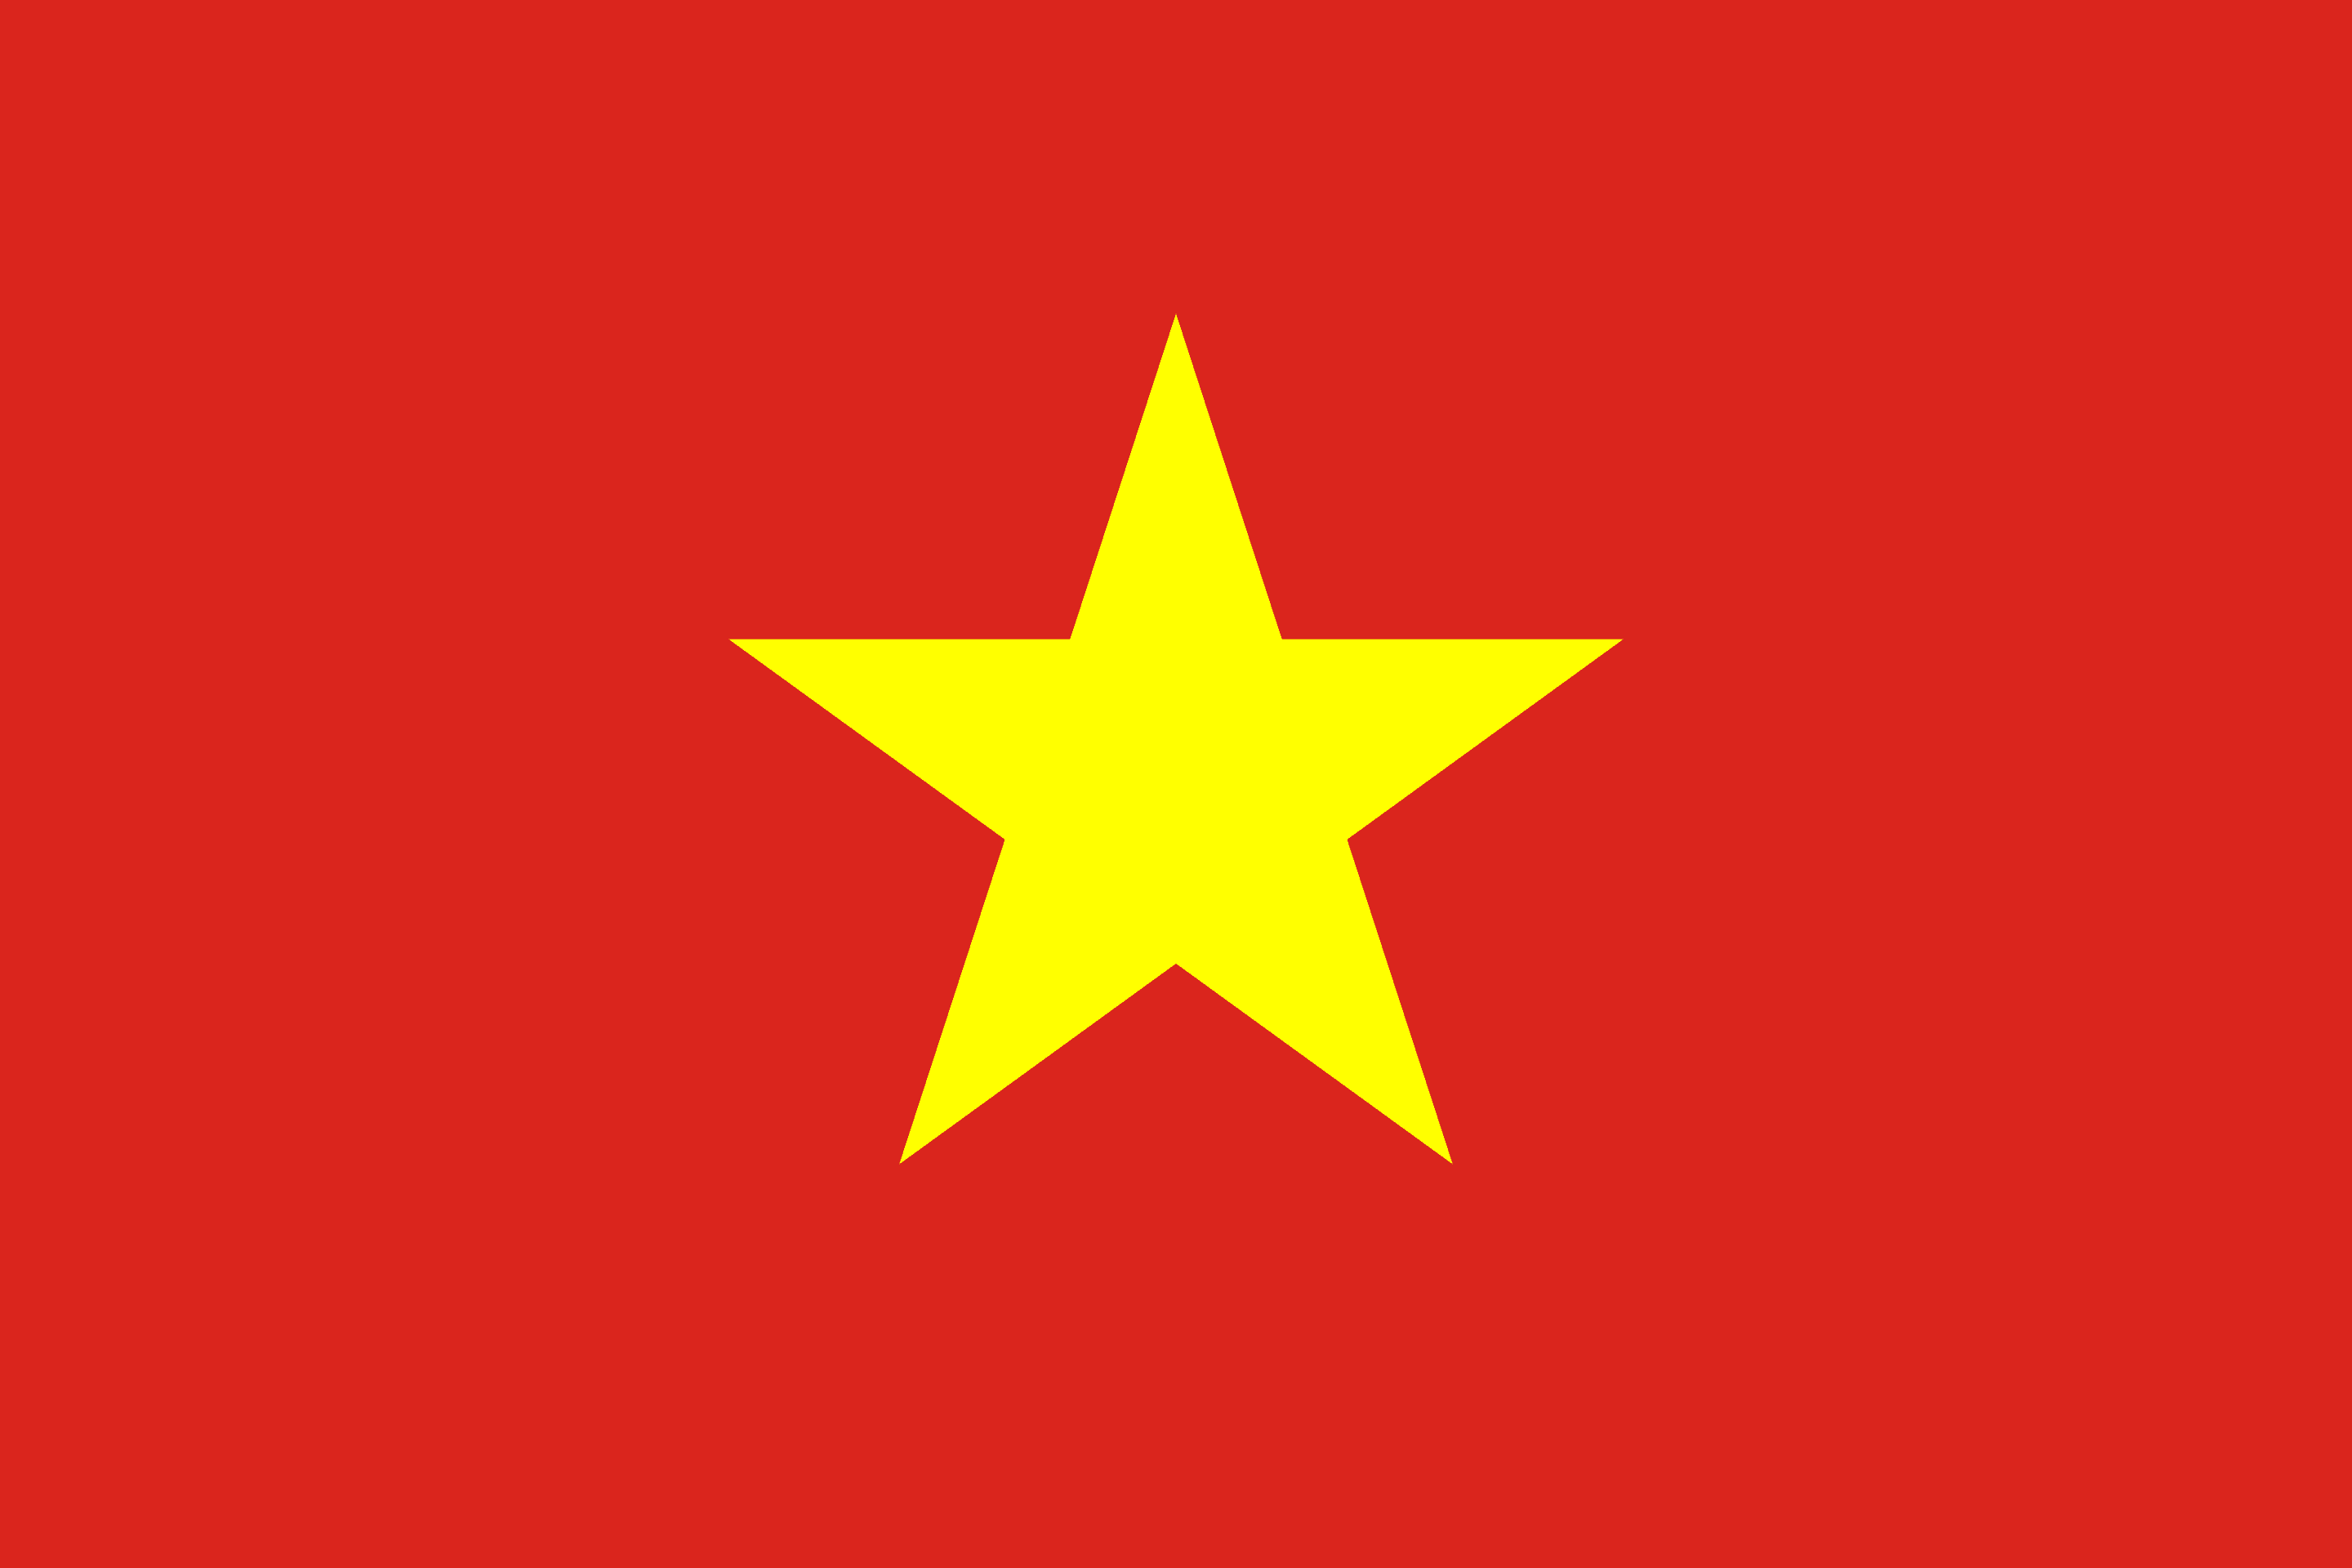 Drone Laws in Vietnam